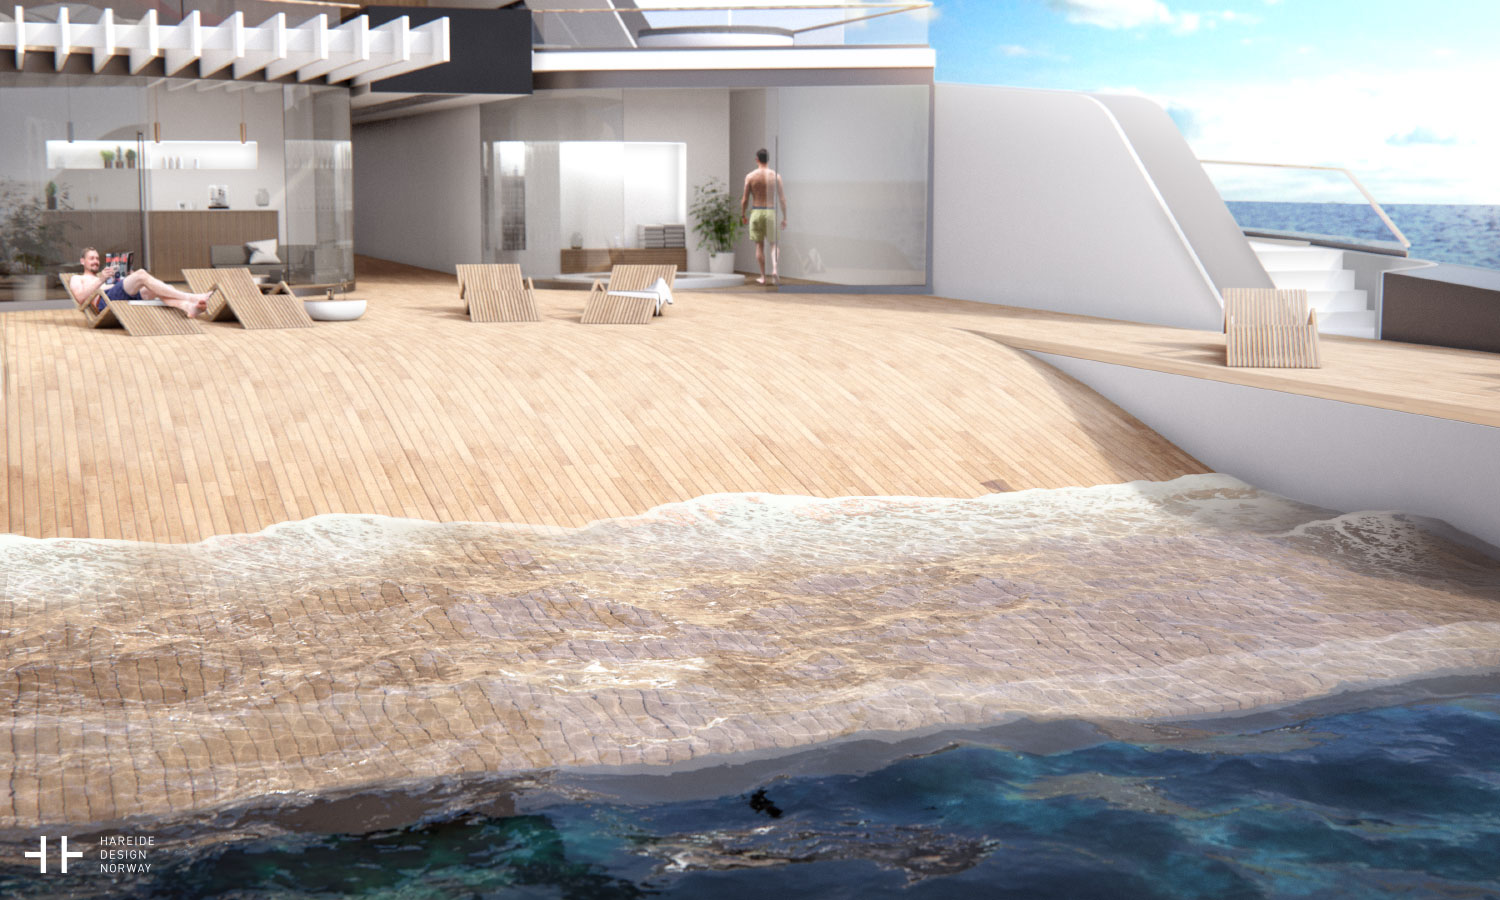 Your own private beach at the stem – 108M mega yacht. Hareide Design 2016